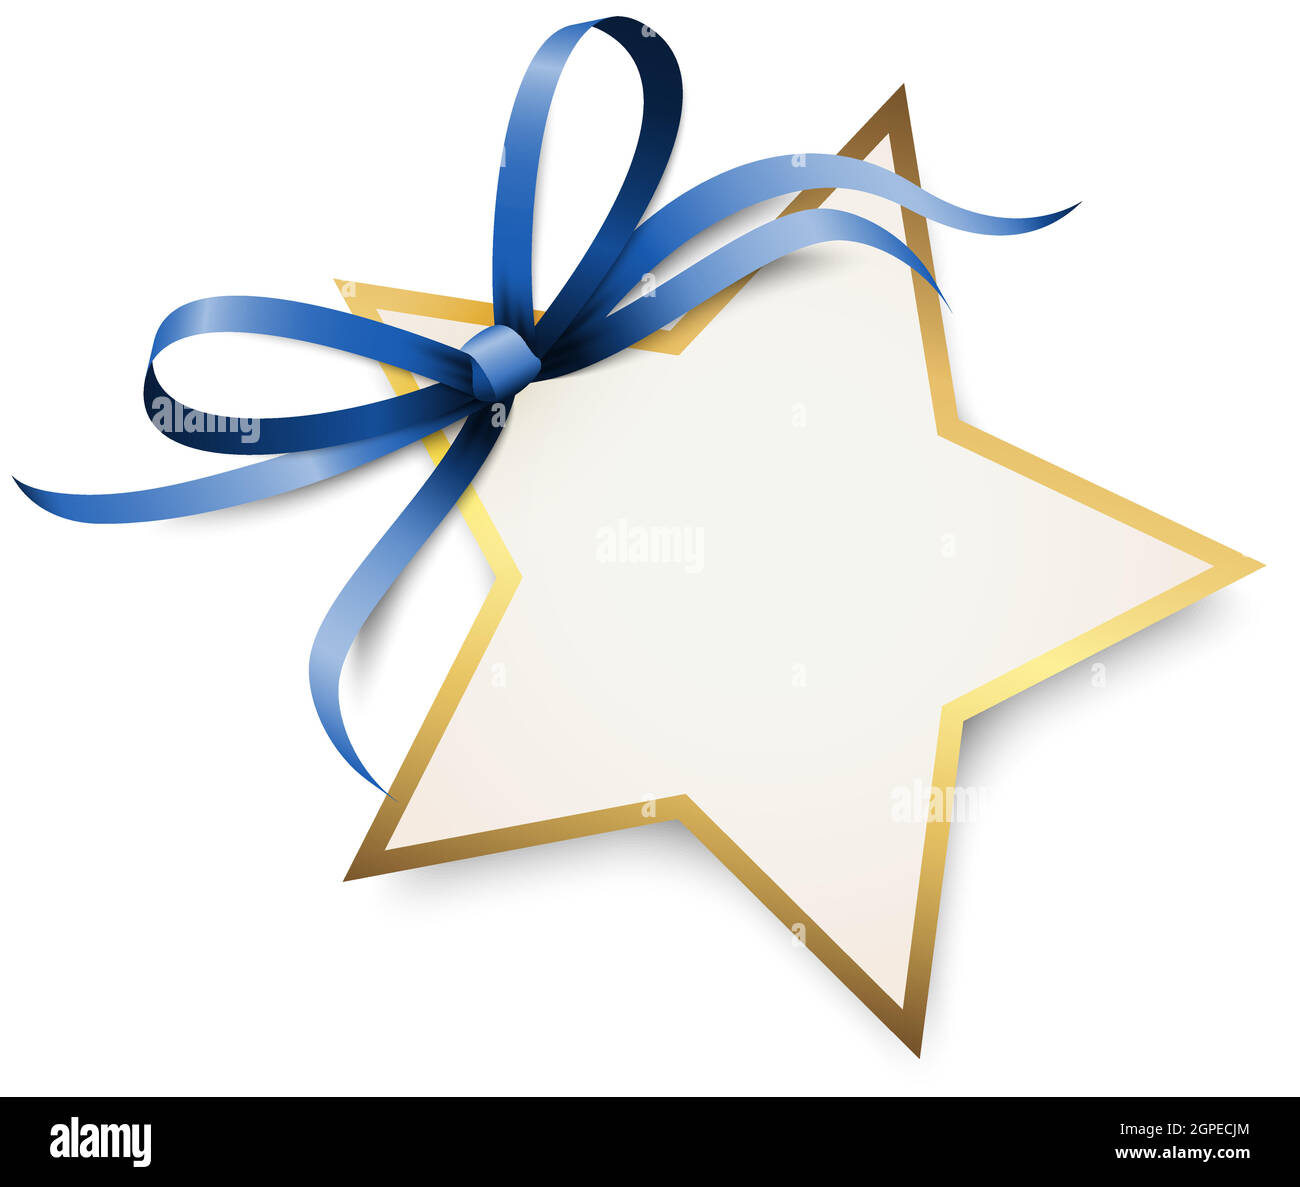 Christmas Ornament Gold Ribbon Vector Illustration Stock Vector (Royalty  Free) 315045659